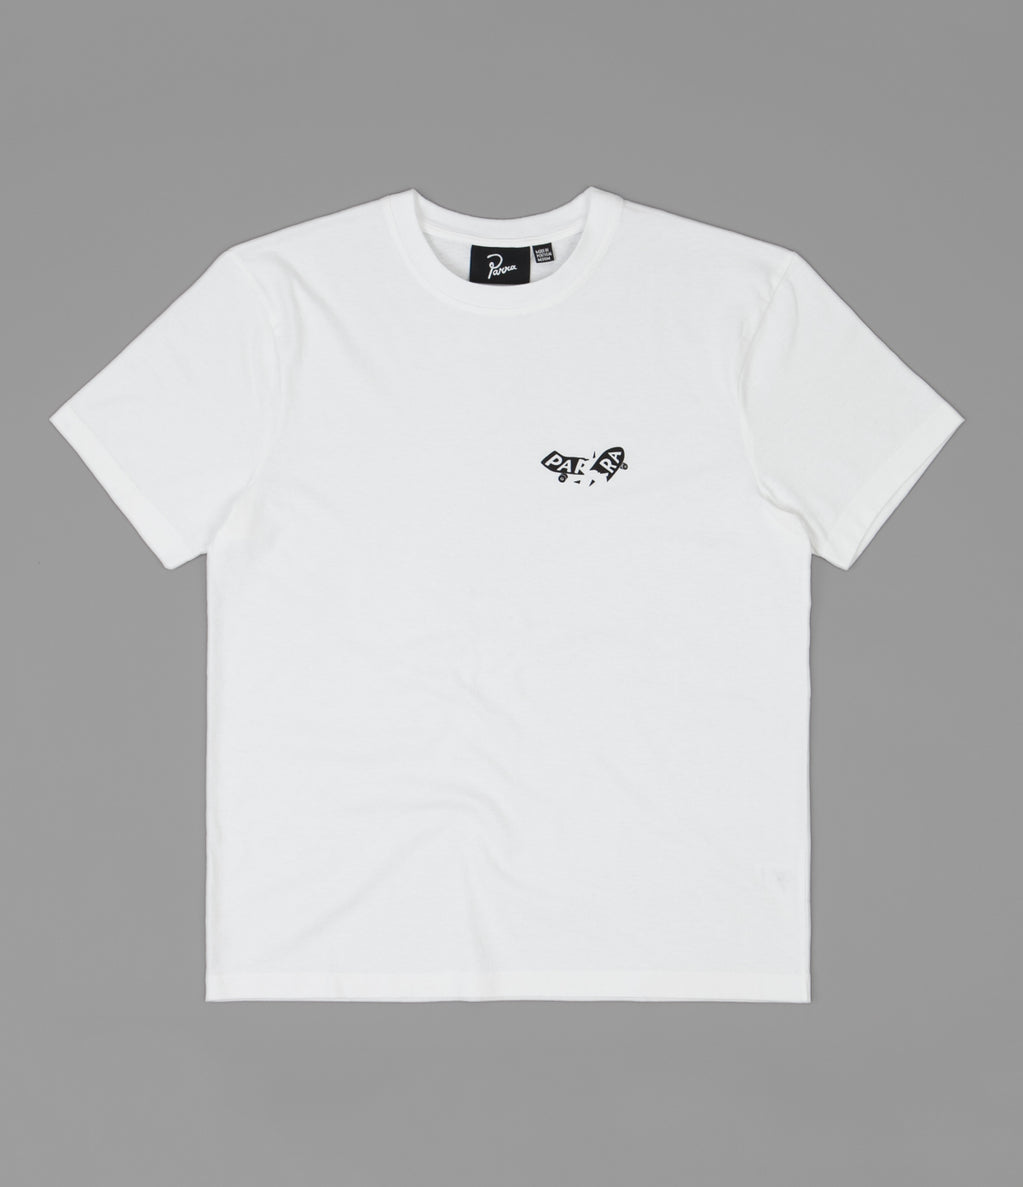 by Parra Focused T-Shirt - White | Flatspot